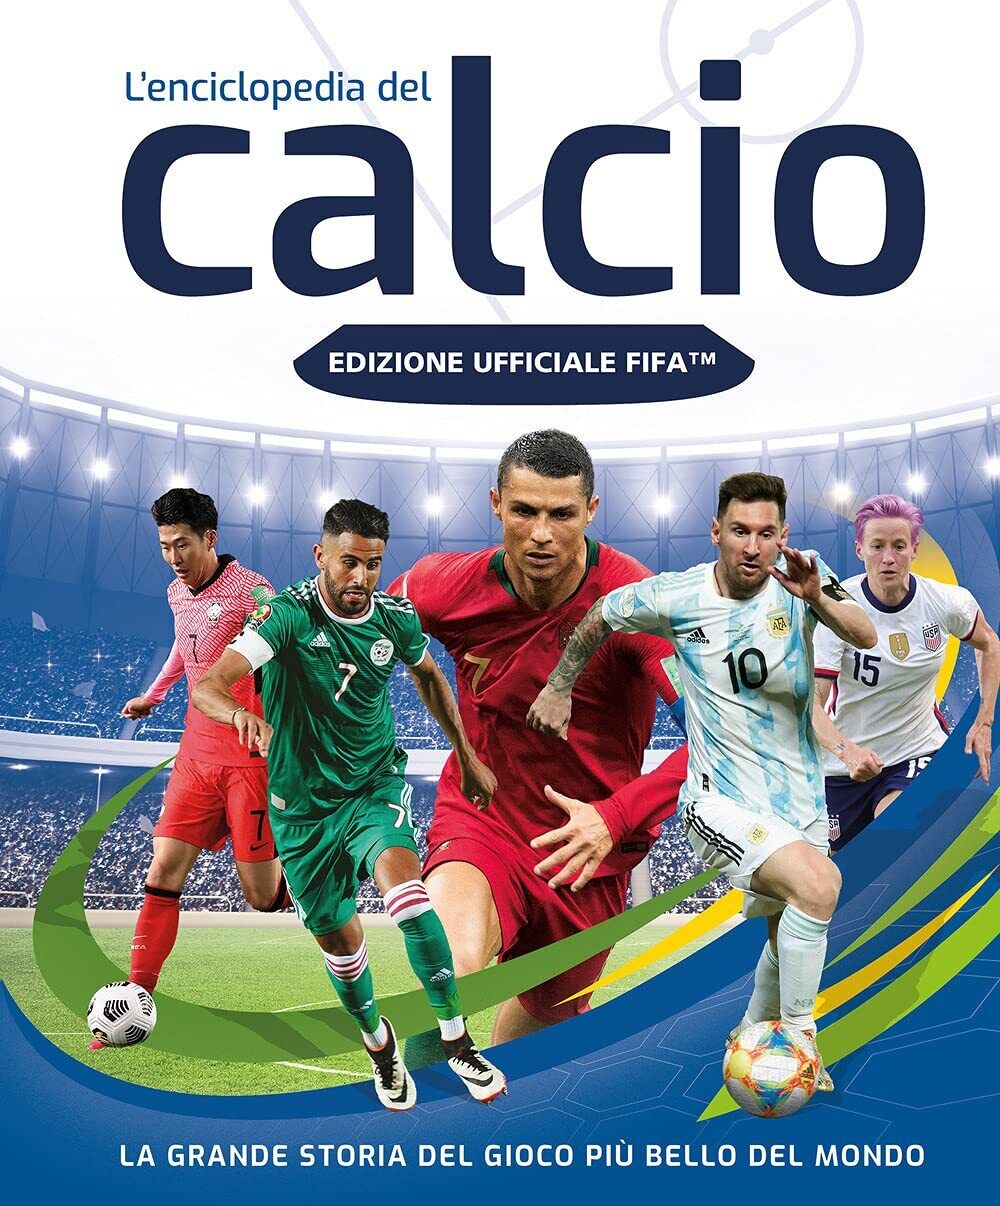 FIFA Official. L'enciclopedia del calcio - AA.VV. - Magazzini Salani, 2021 libro usato